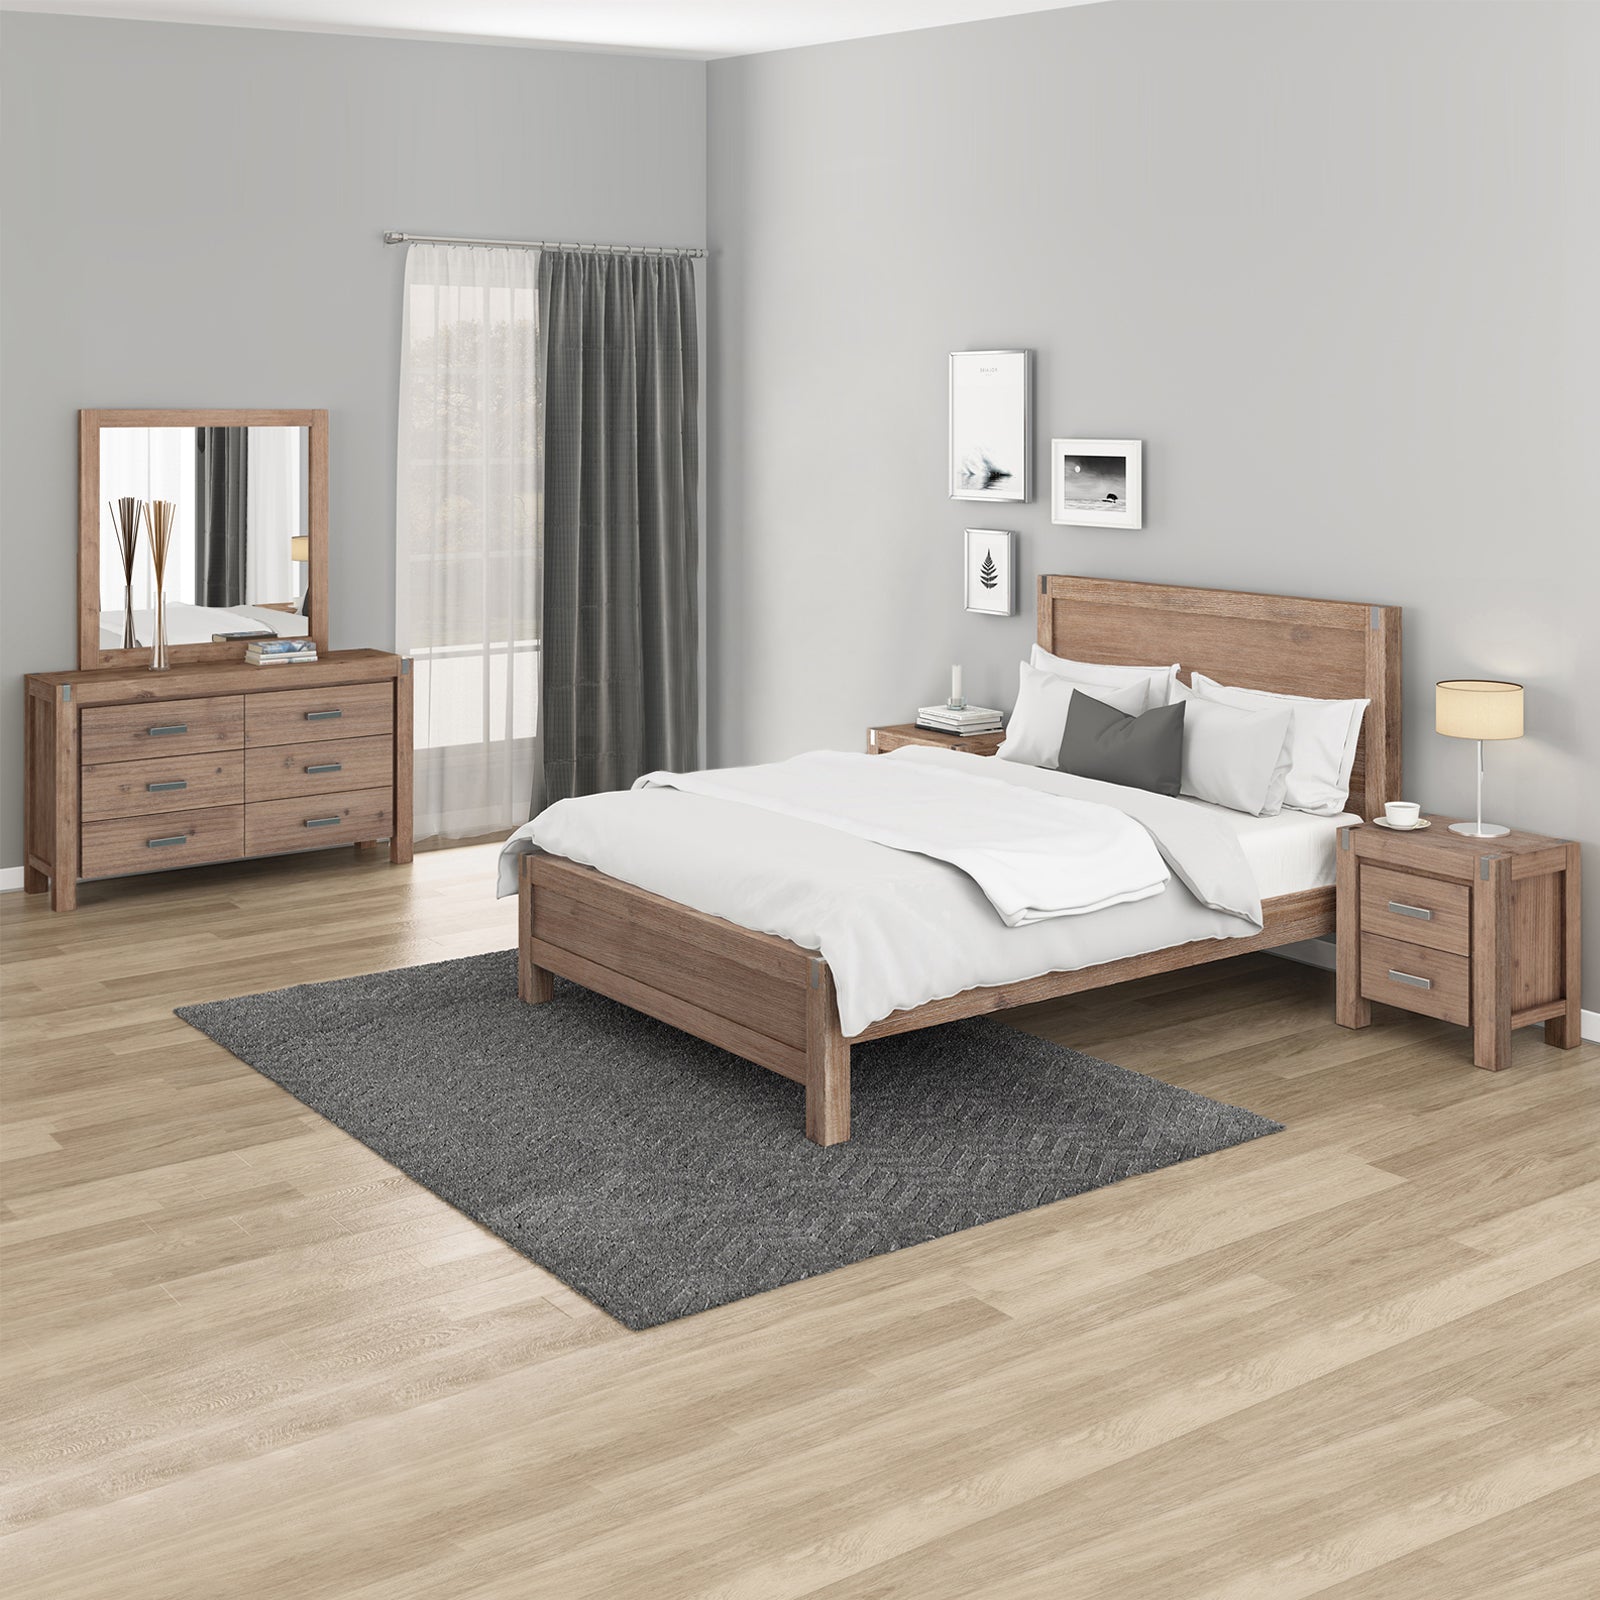 Noor 4 Pieces Single Size Bedroom Suite Oak Colour with Dresser